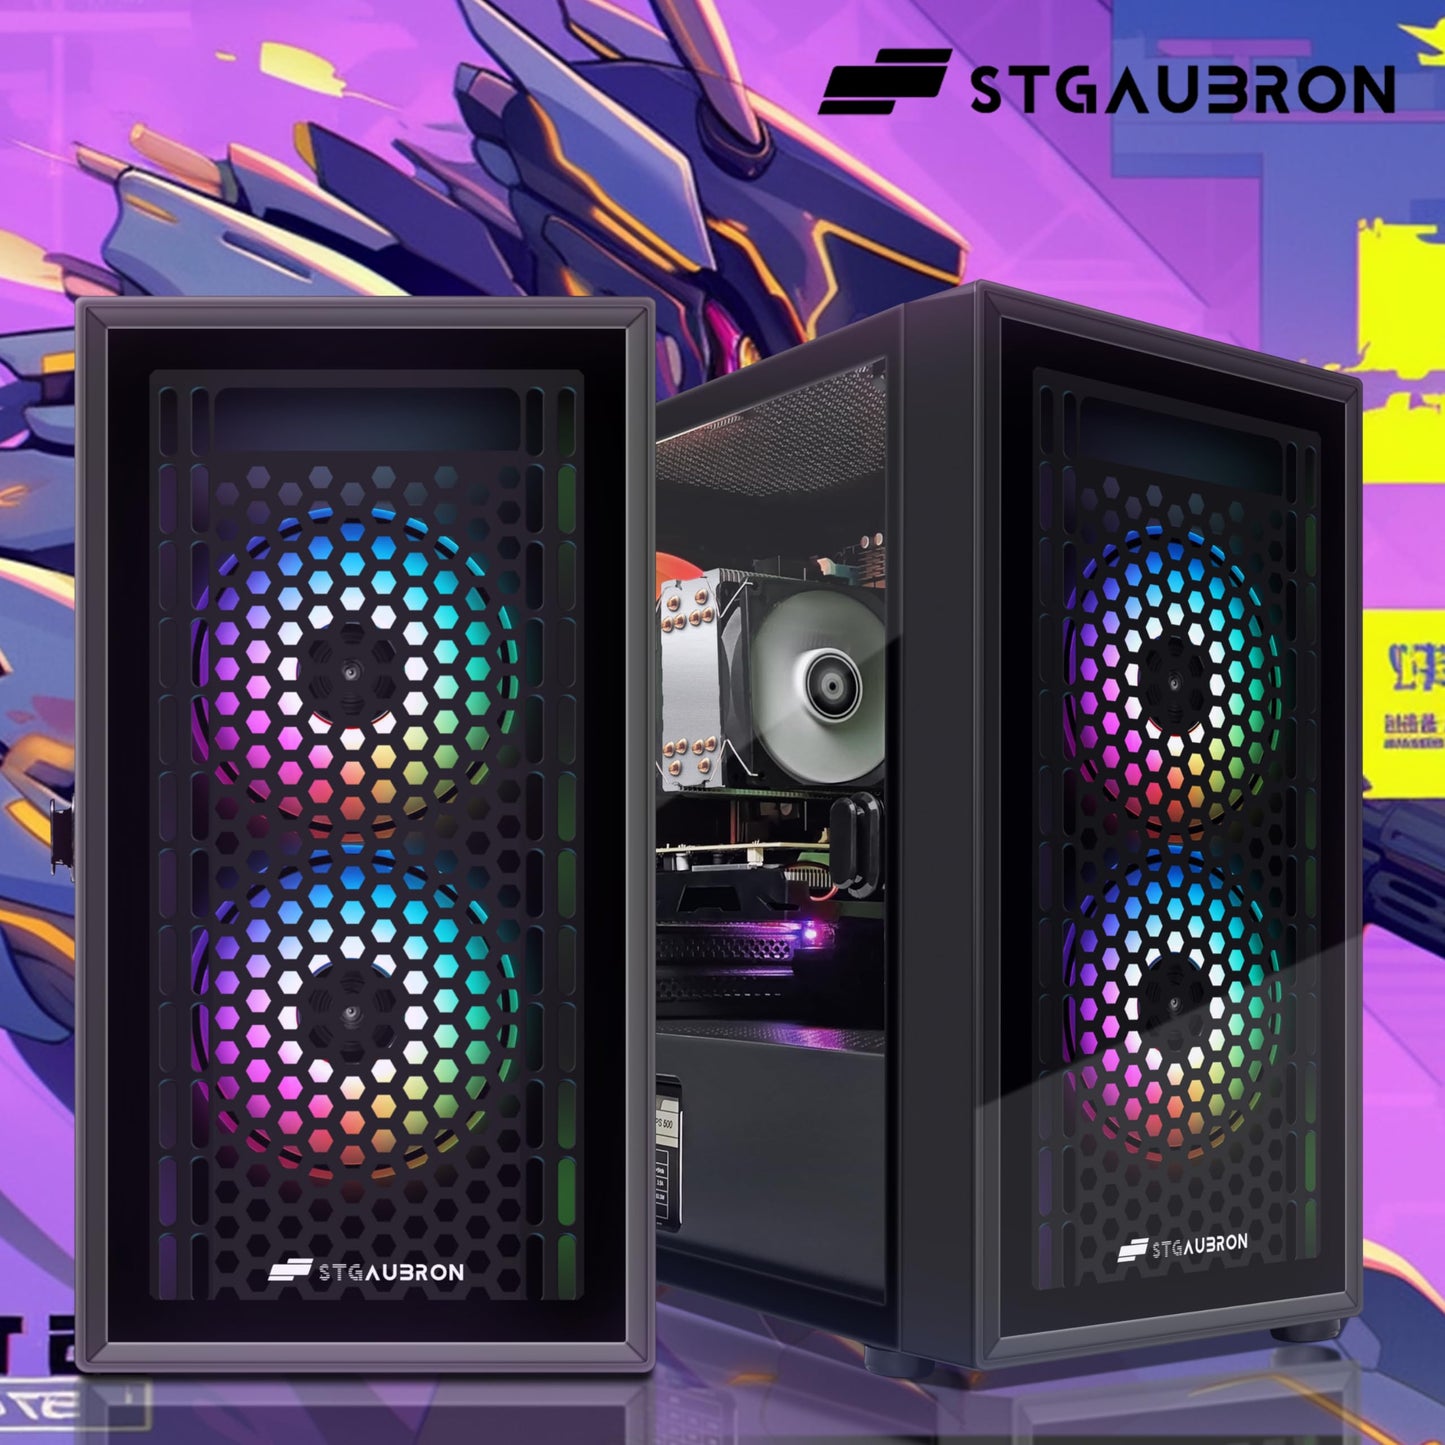 STGAubron Gaming Desktop PC, Intel Xeon E5 3.0G, Radeon RX 550 4G GDDR5, 16G Ram, 512G SSD, 600M WiFi, BT 5.0, RGB Fan x 3, RGB Keyboard & Mouse & Mouse Pad, W10H64